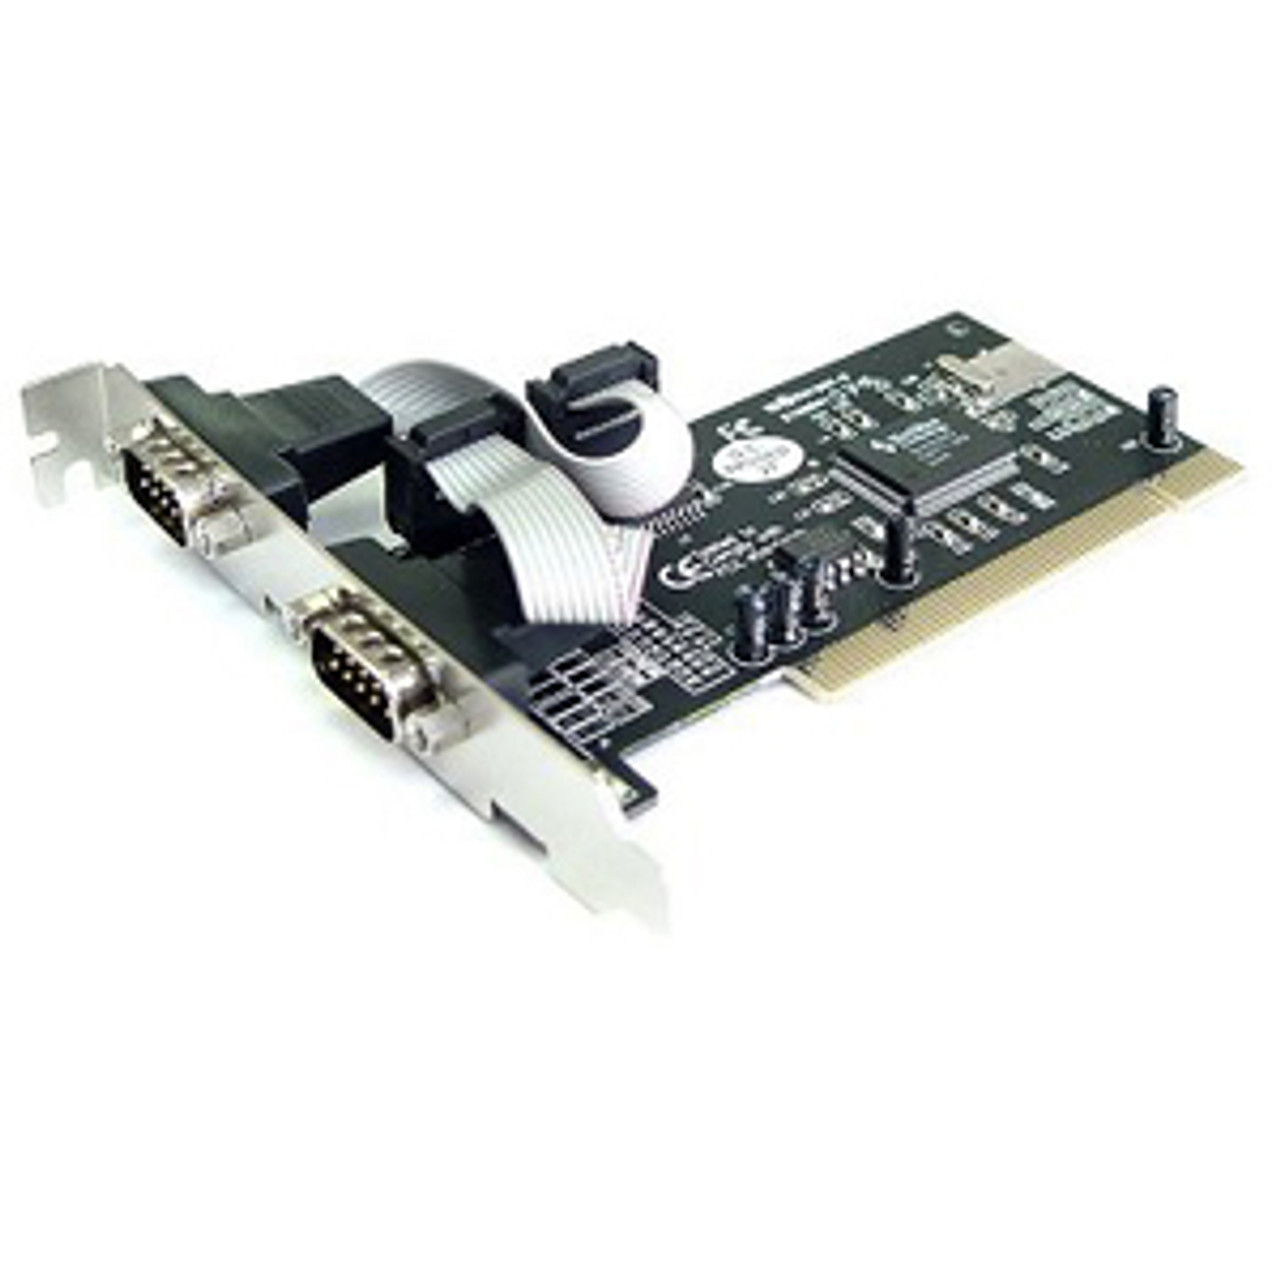 DS-PCI-100 Quatech Serial Pci Board 2 Port